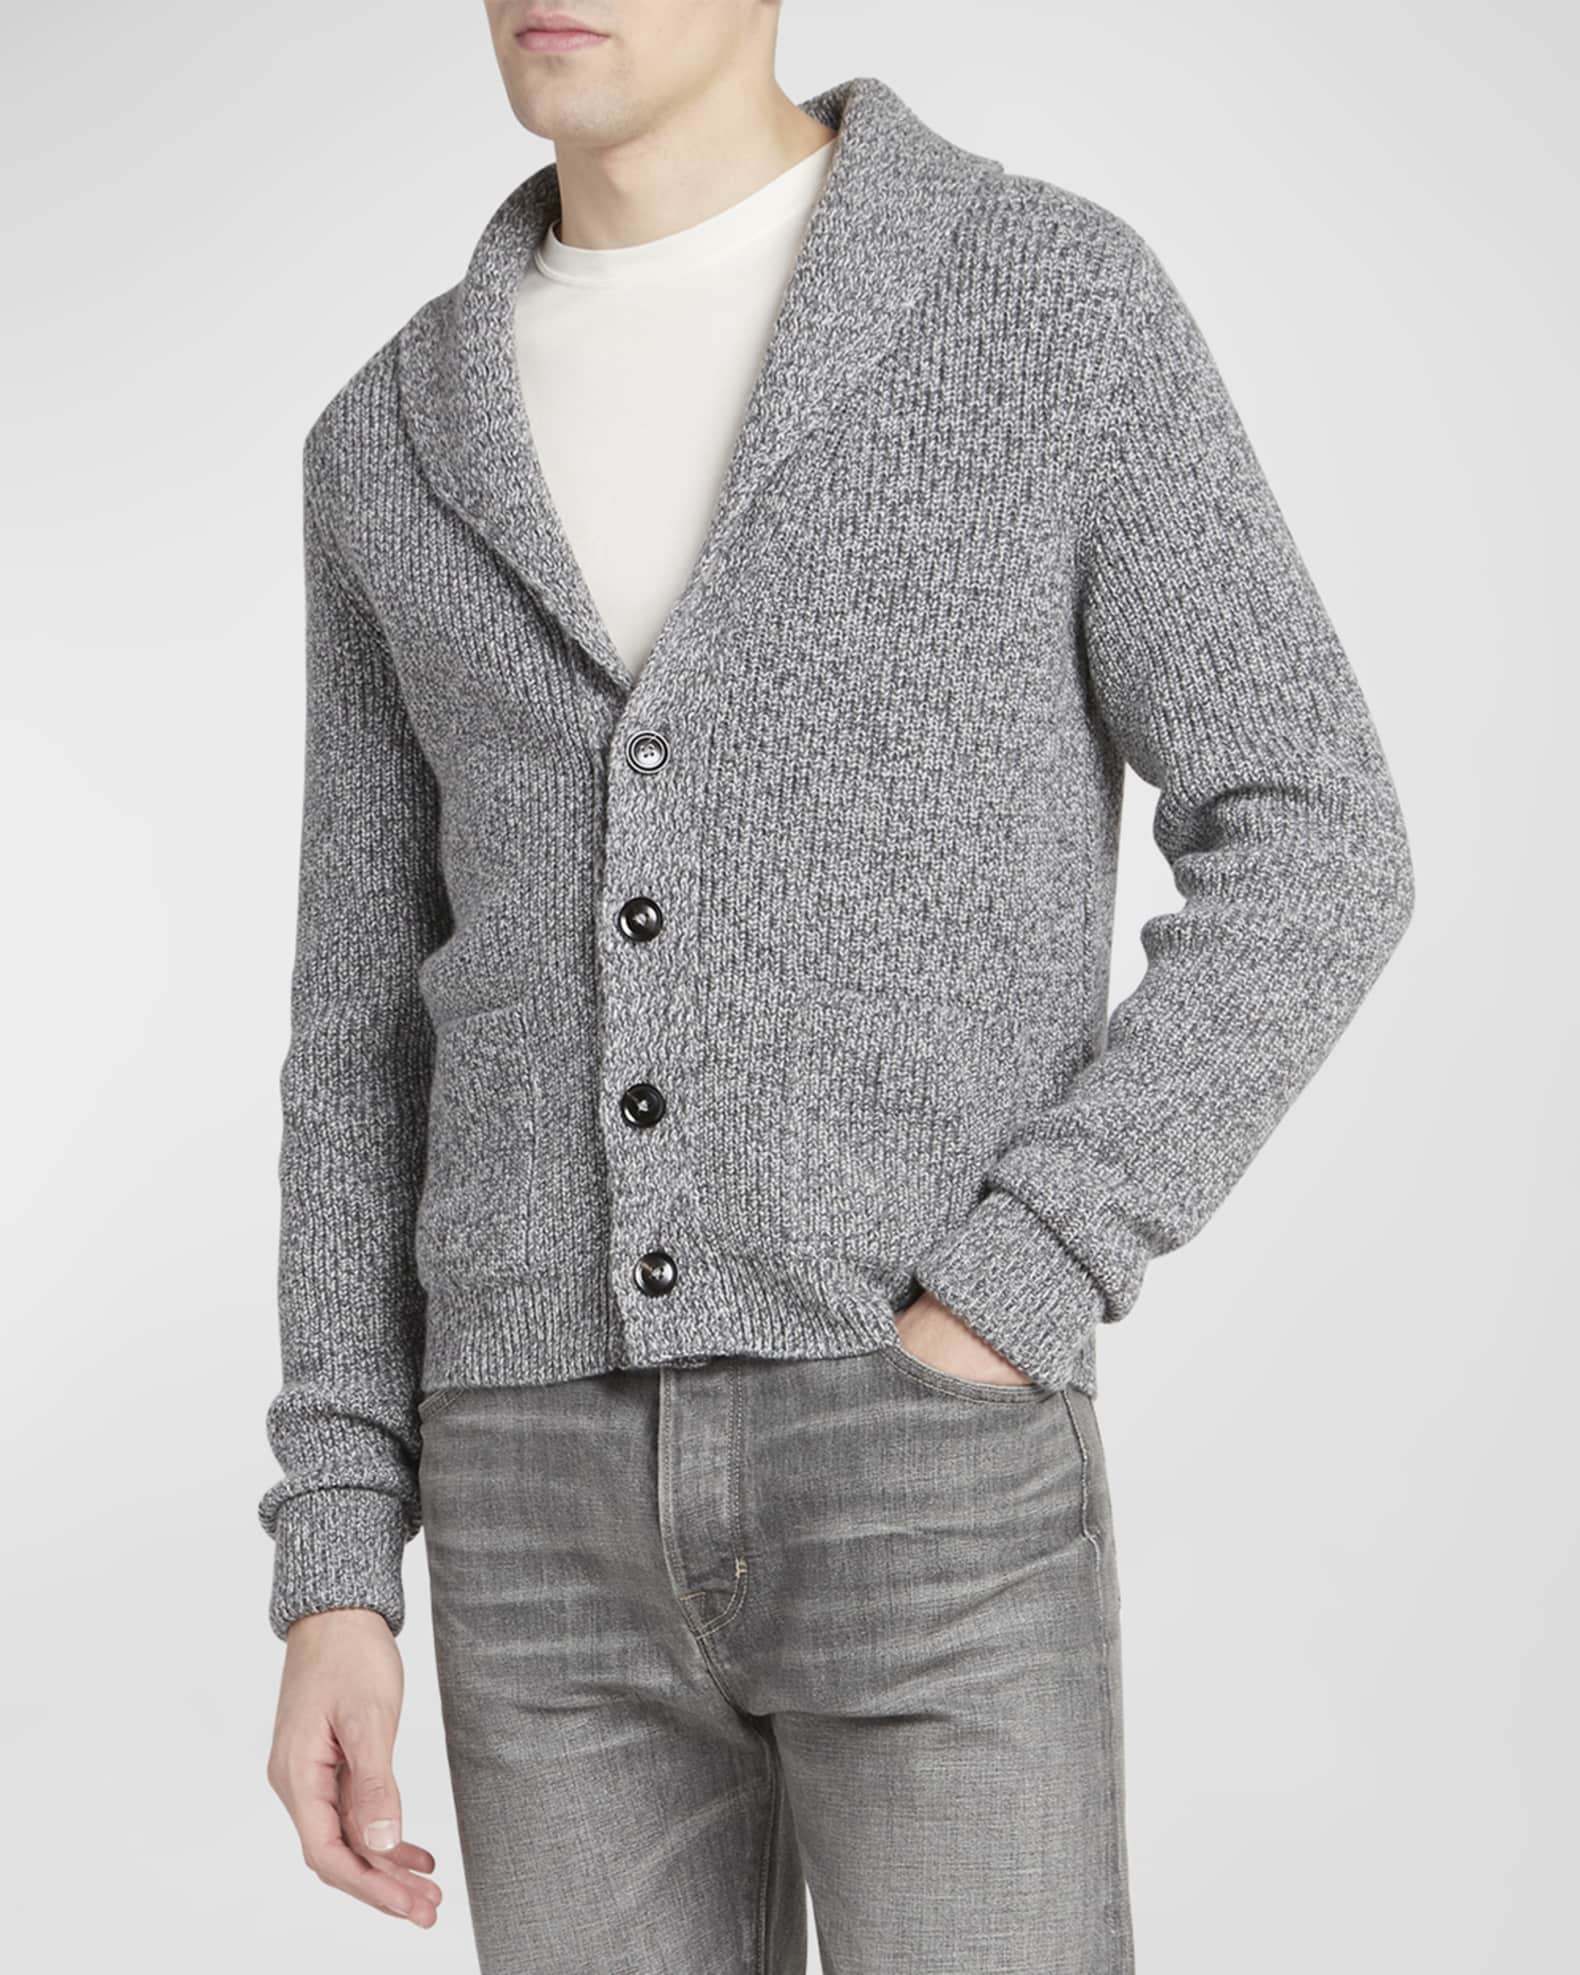 TOM FORD Men's Cashmere Shawl Collar Cardigan Sweater